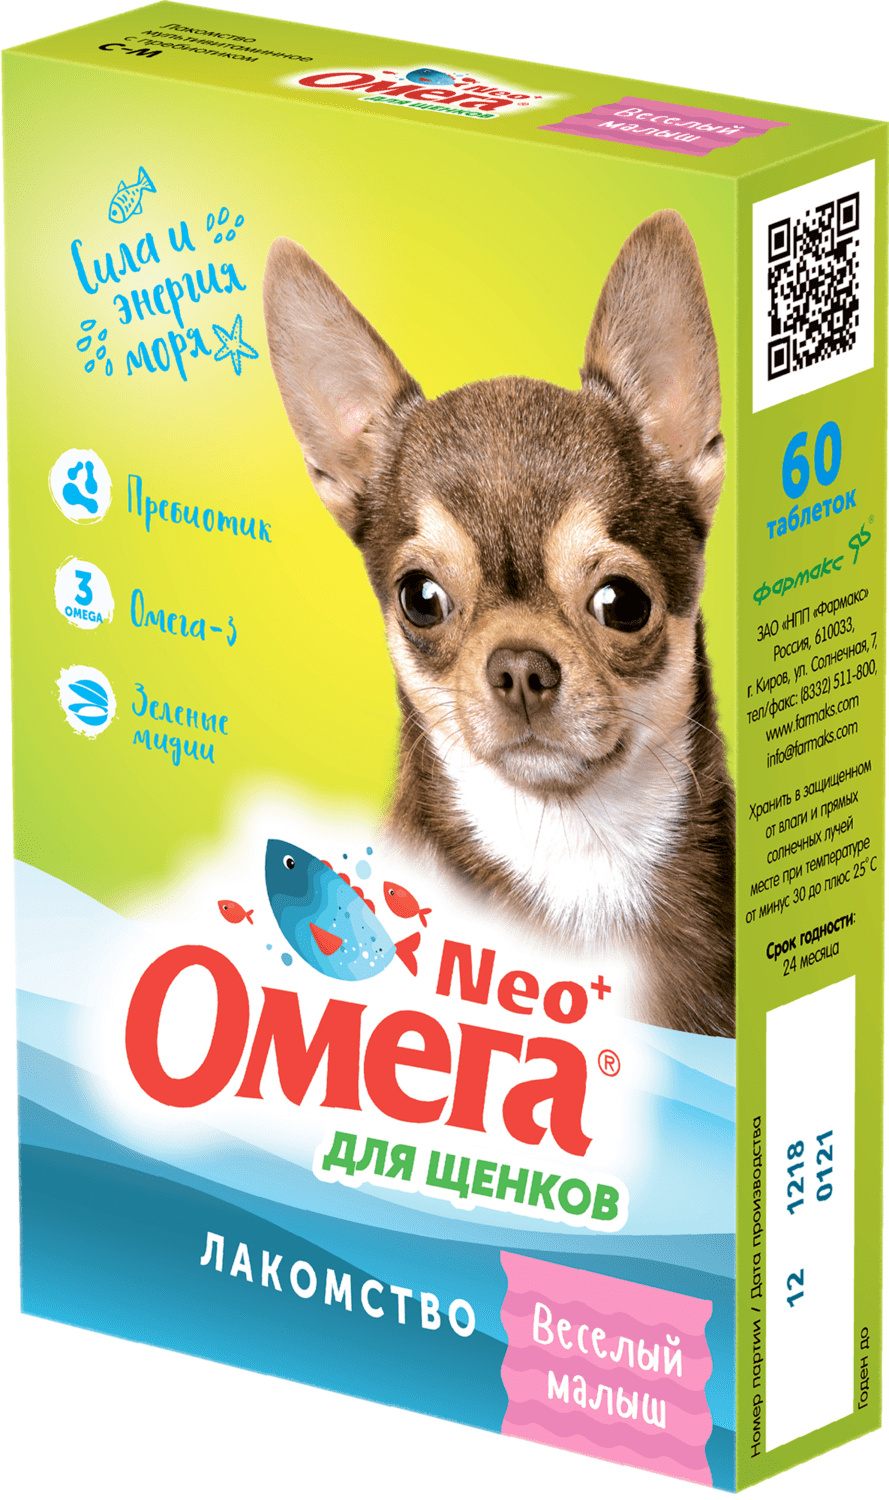 Фармакс Фармакс омега Neo+ витамины с пребиотиком для щенков (40 г) фармакс фармакс омега neo мультивитаминное лакомство с морскими водорослями для собак 60 г